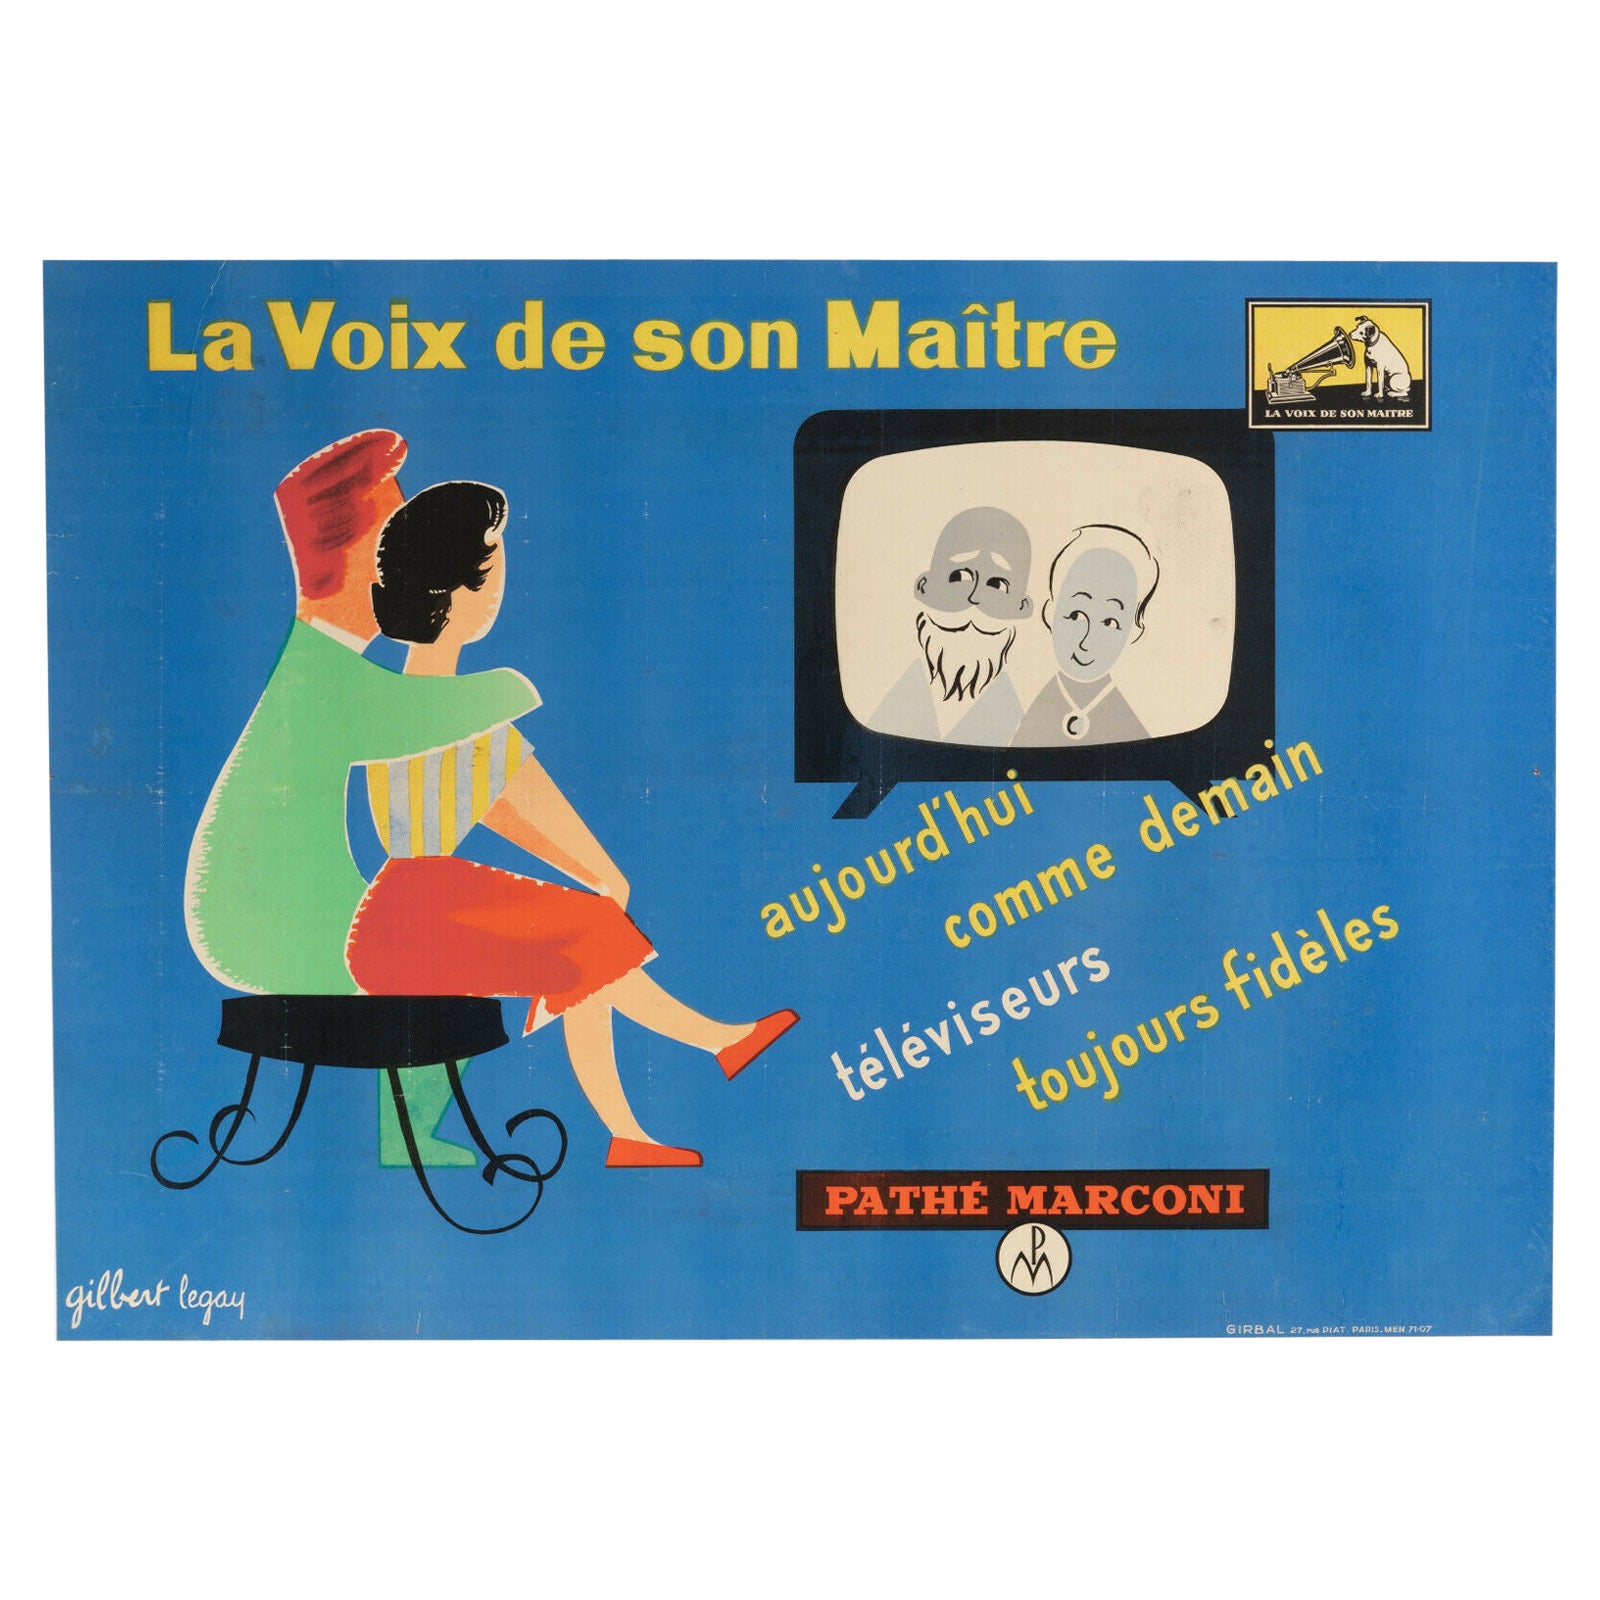 Original Poster-His Master's Voice-His Master's Voice-Pathe Marconi, c.1955 For Sale